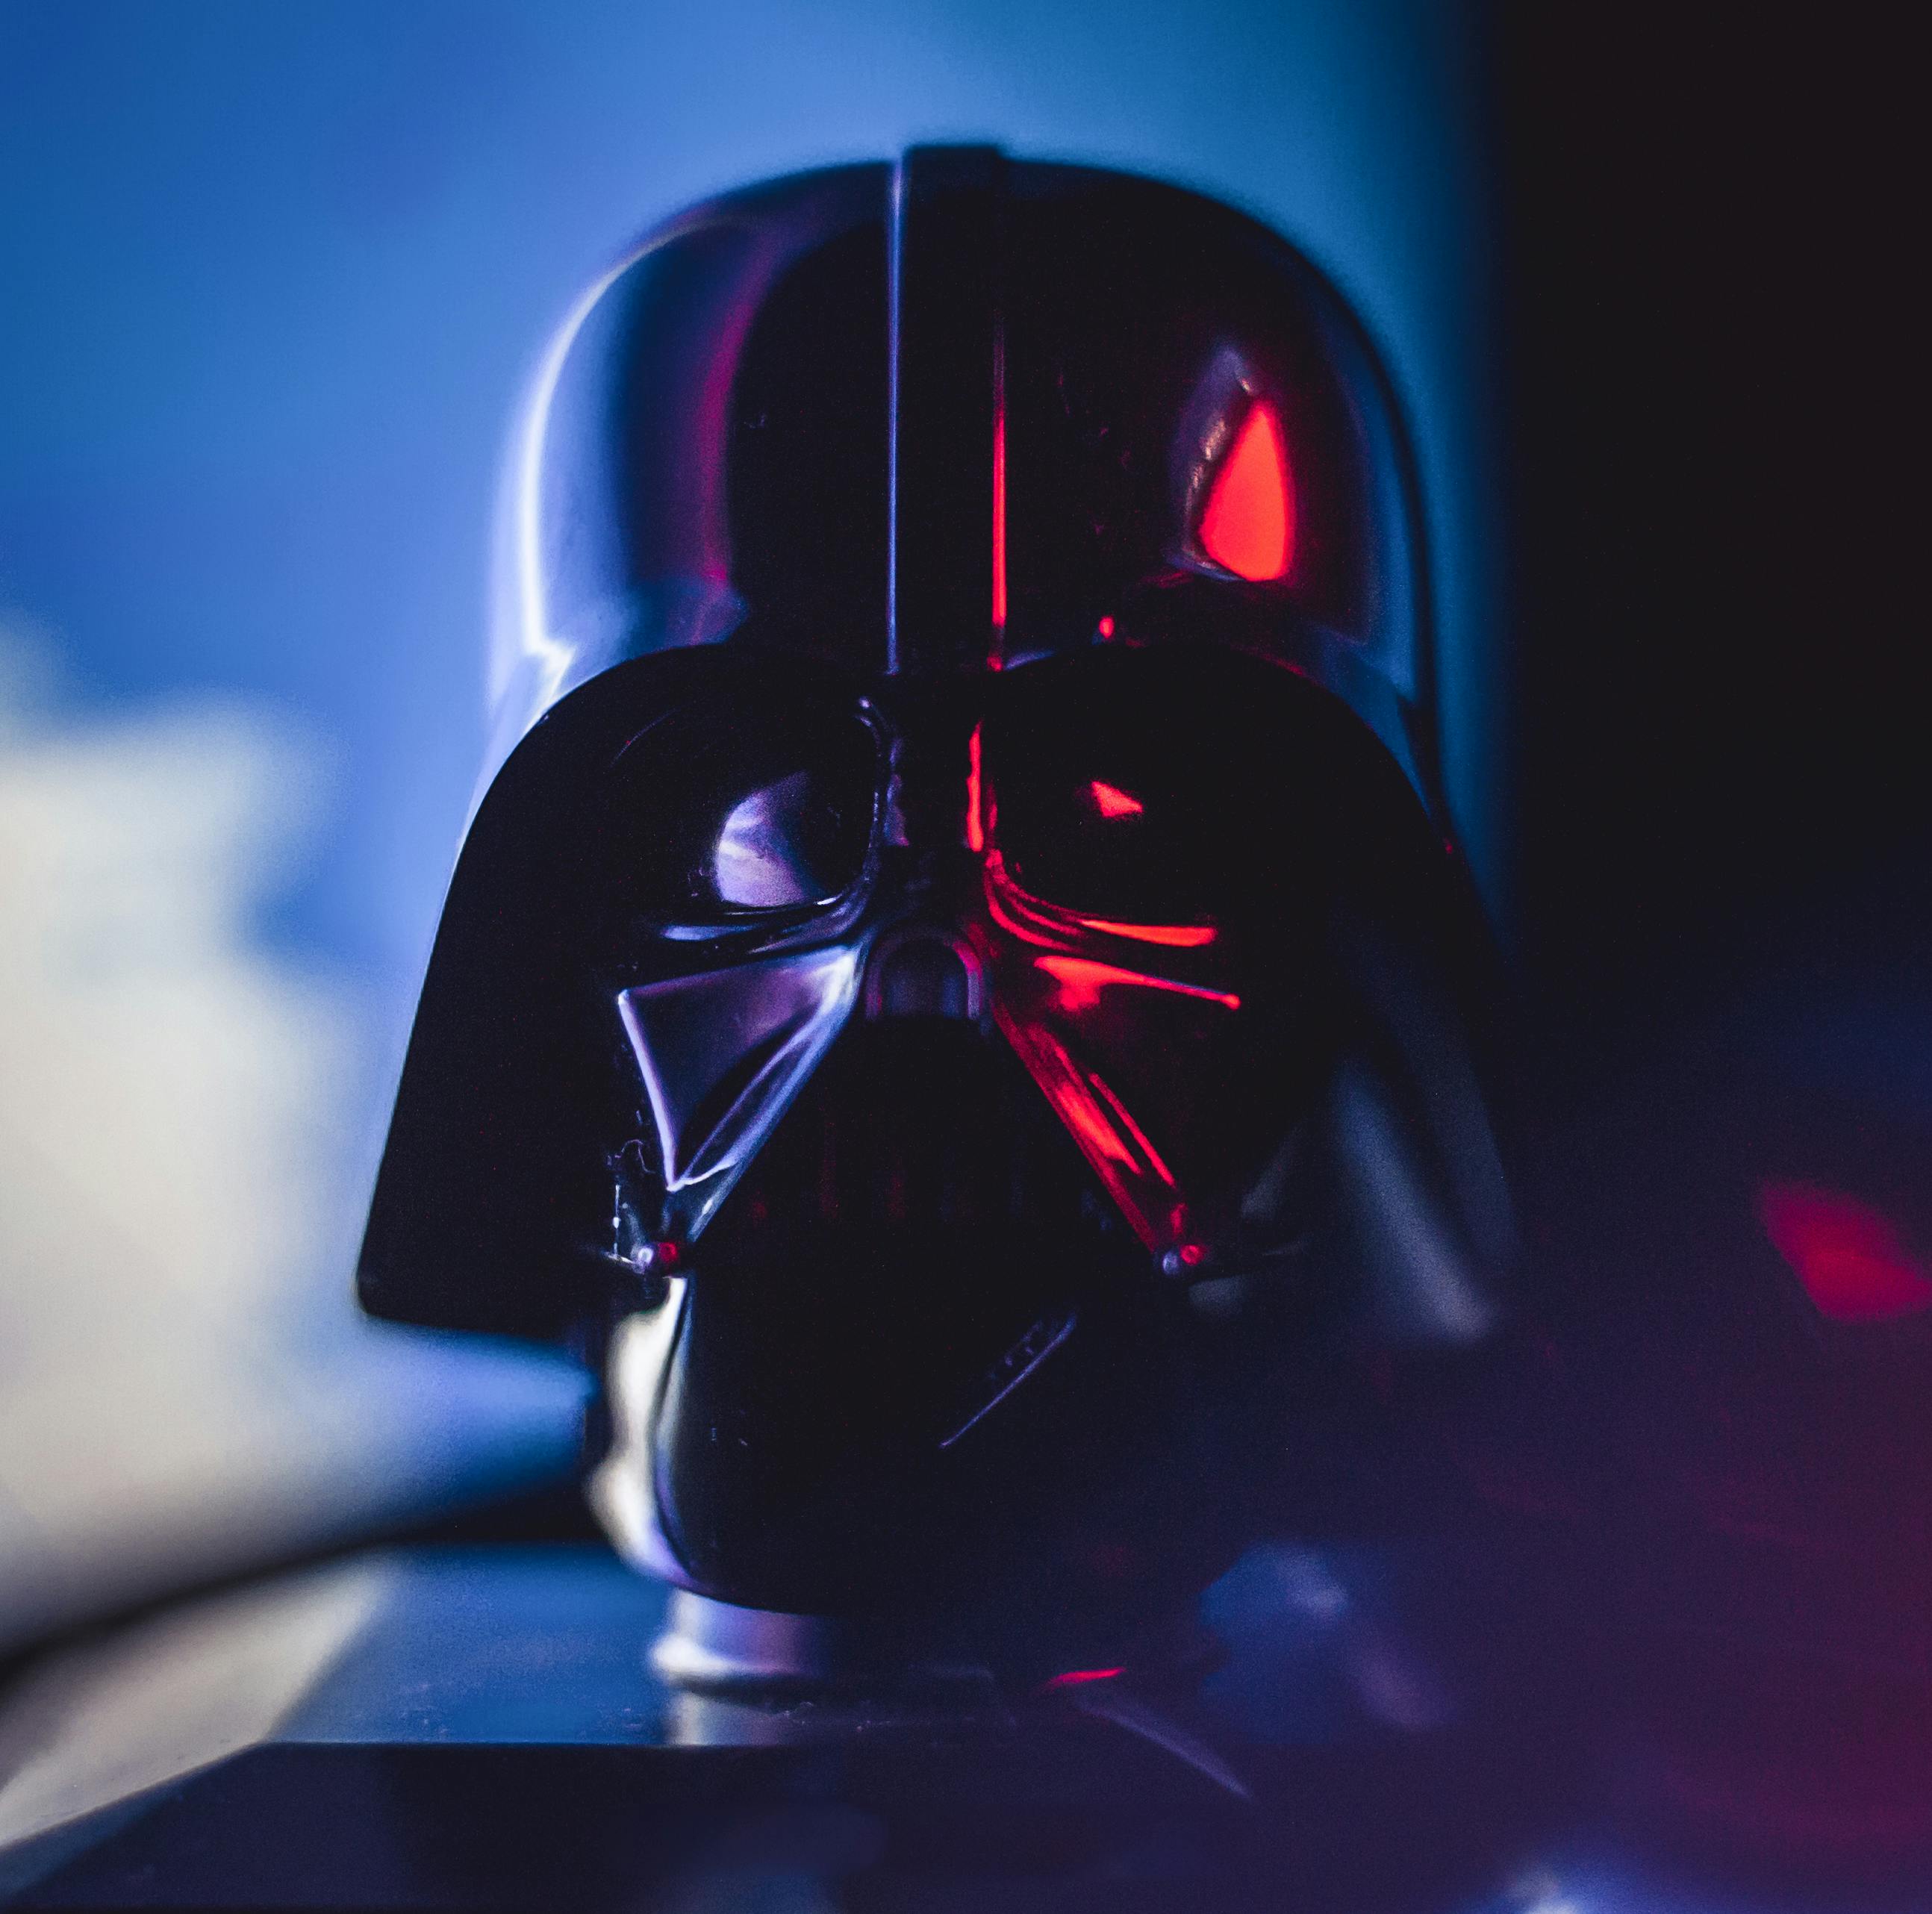 Darth Vader Star Wars Photo - Free photo on Pixabay - Pixabay